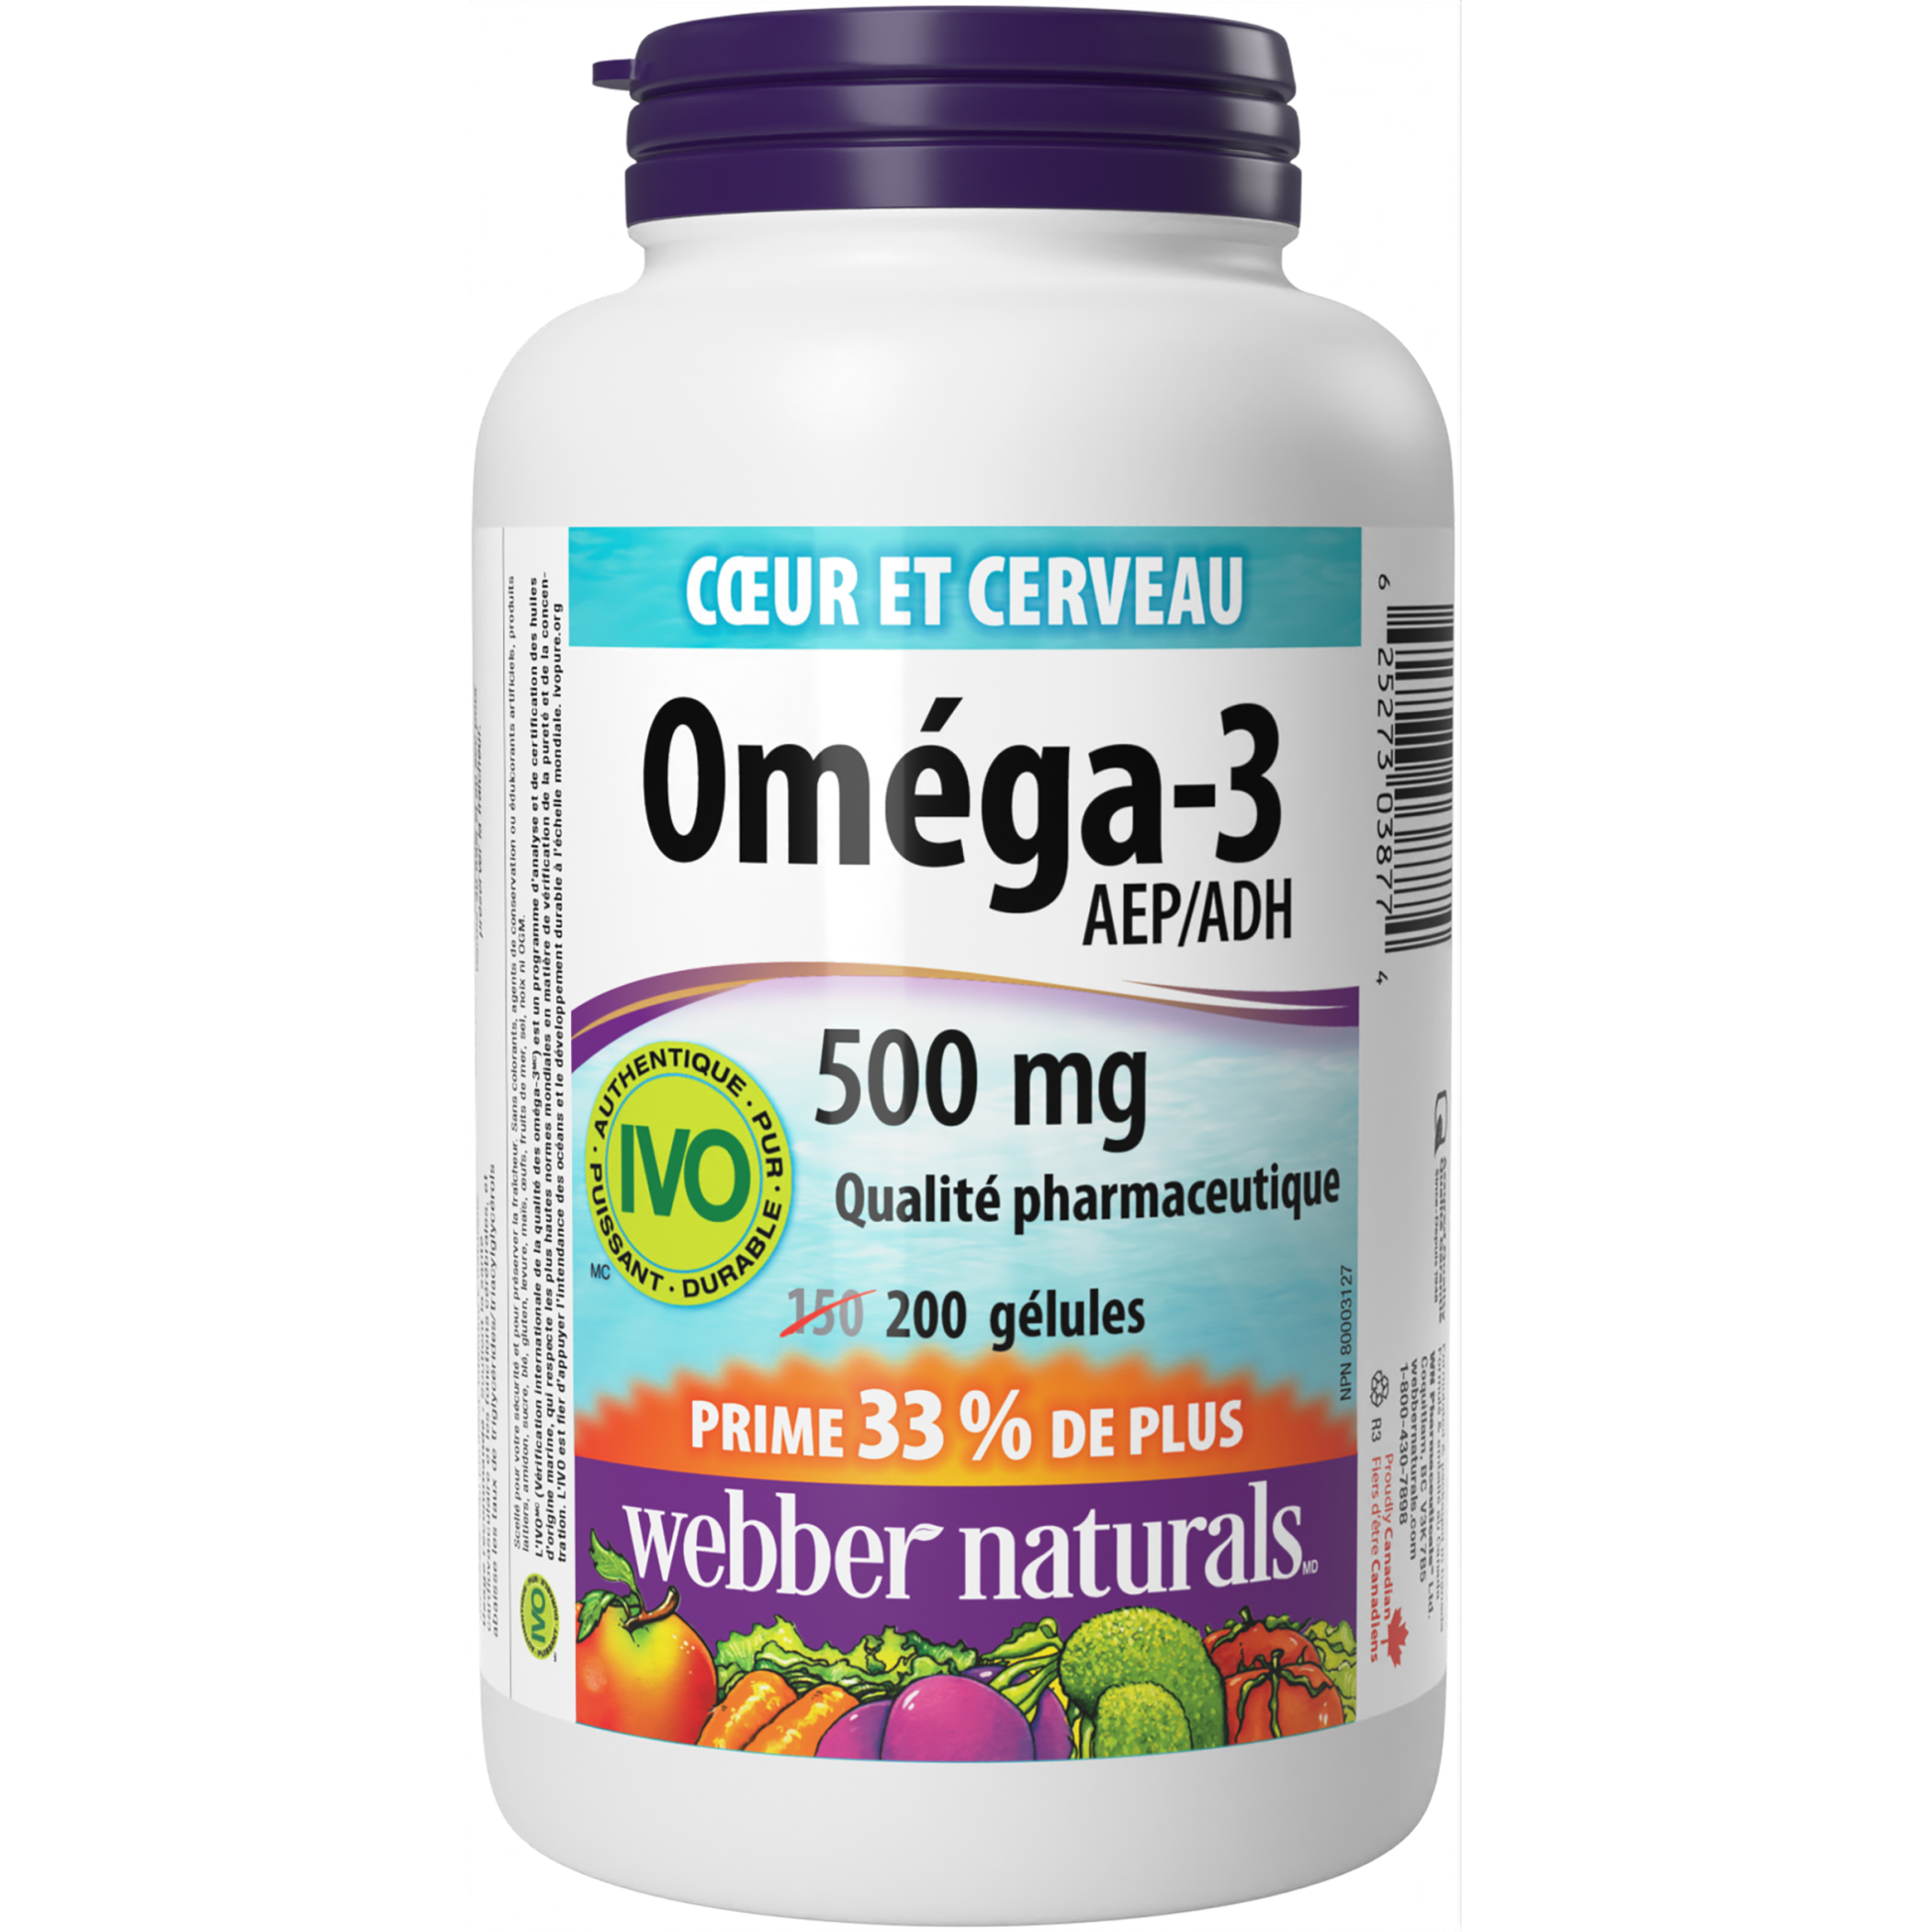 Oméga-3 Qualité pharmaceutique 500 mg AEP/ADH for Webber Naturals|v|hi-res|WN3877